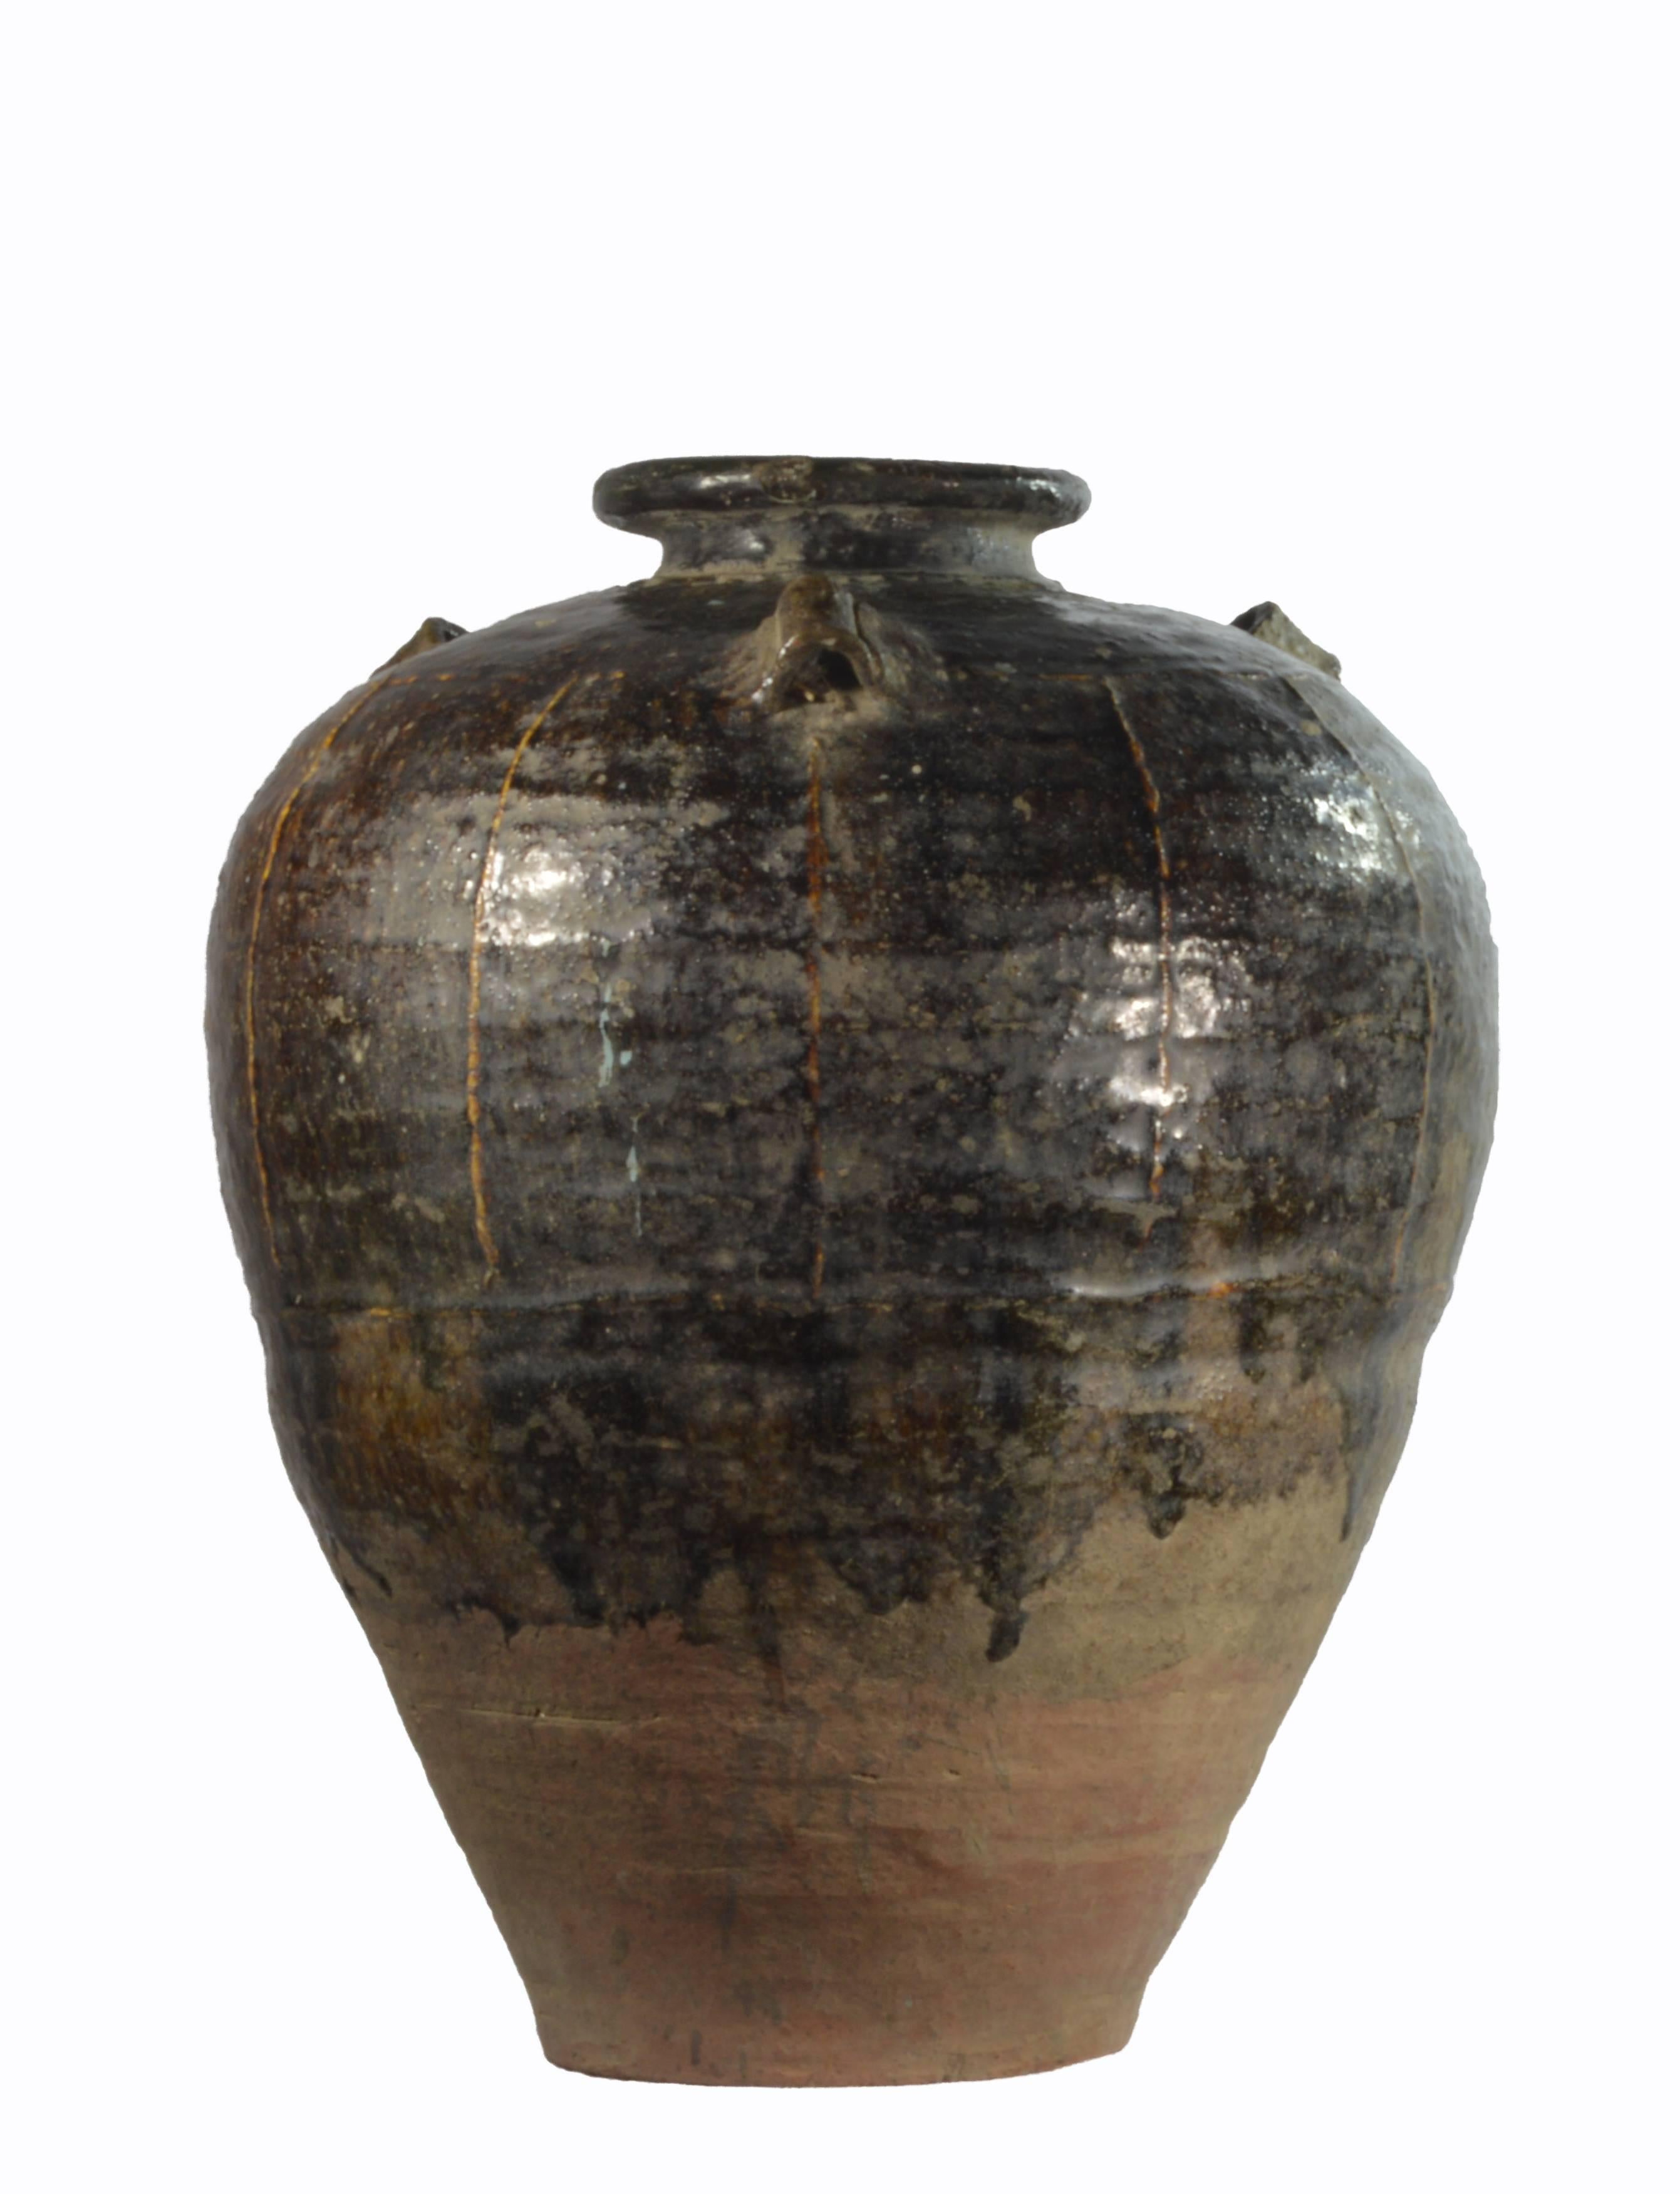 Large Burmese glazed ceramic 16th century vessel from the Martaban port.  